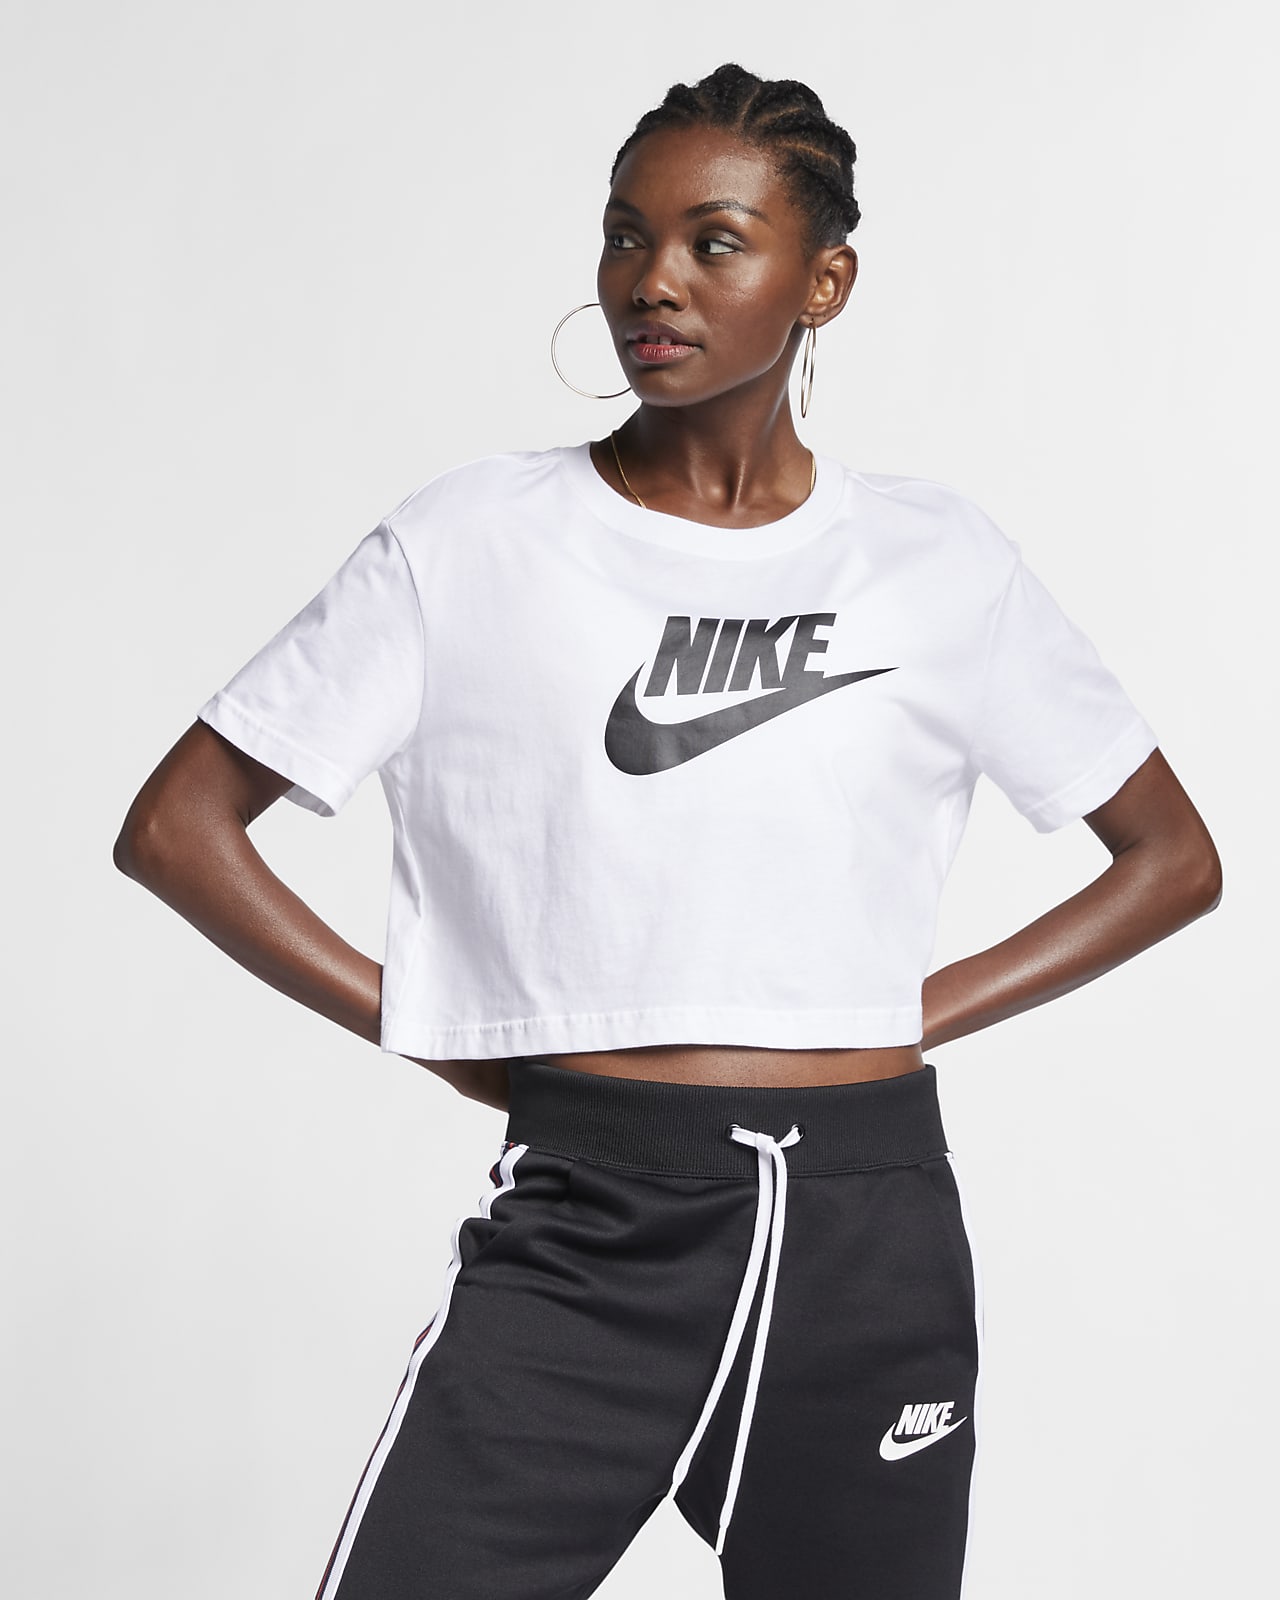 Camisetas Nike para mujer